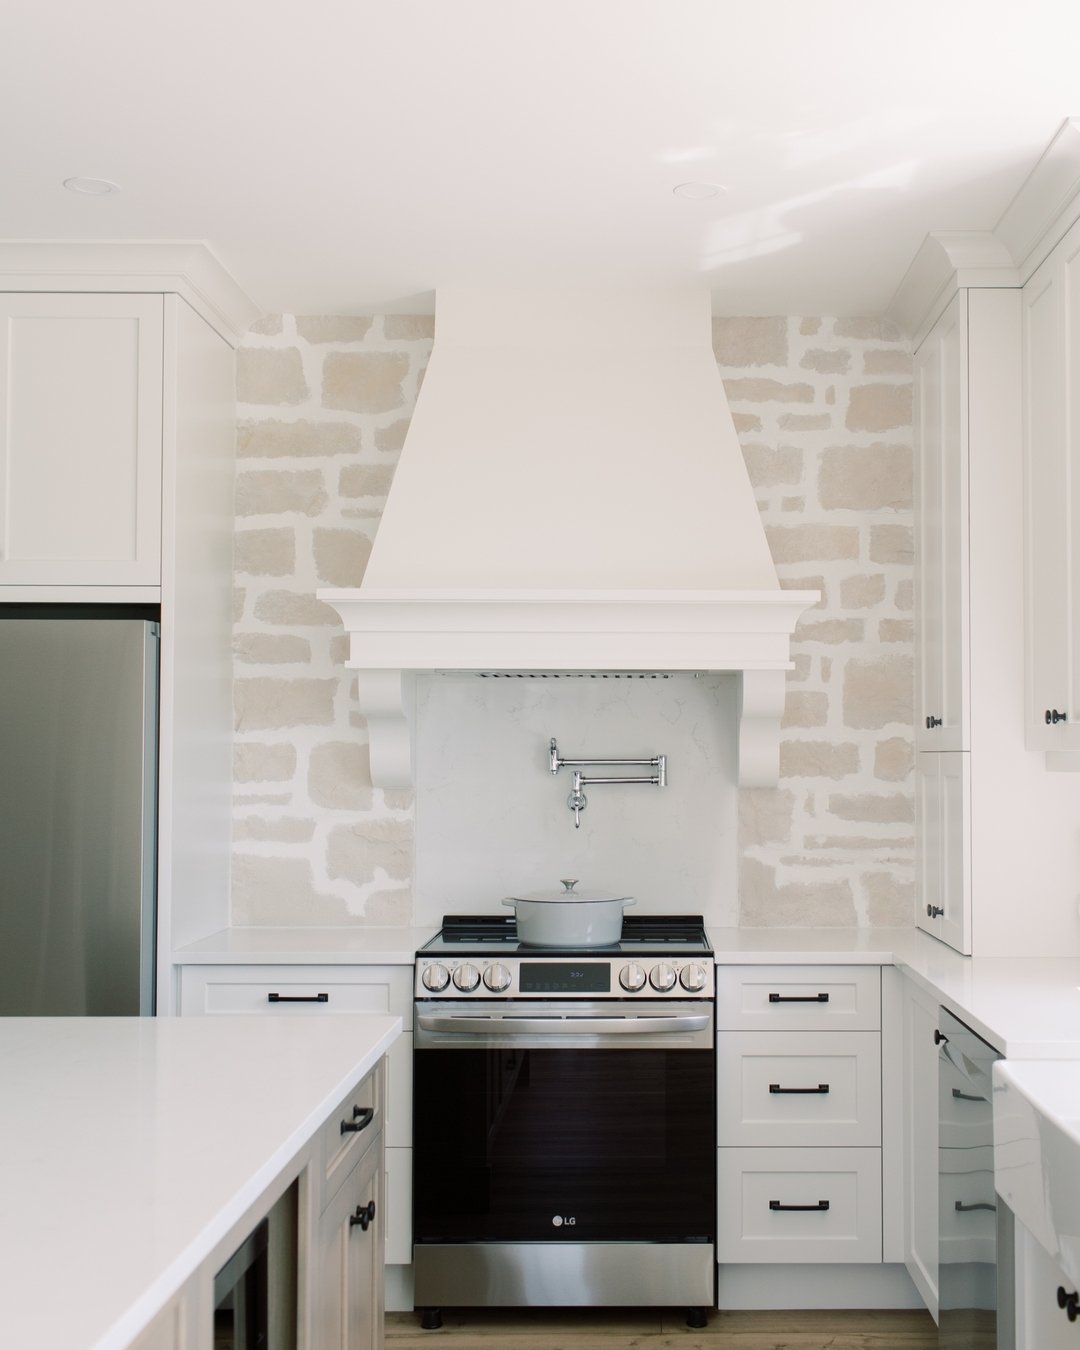 Golden Acres Homestead | Kitchen

Backsplash Stone - @eldoradostone
Cabinet Colour - @benjaminmoore
Appliances - @lg_canada
Kitchen faucet - @moeninc
Pot Filler - @deltafaucet